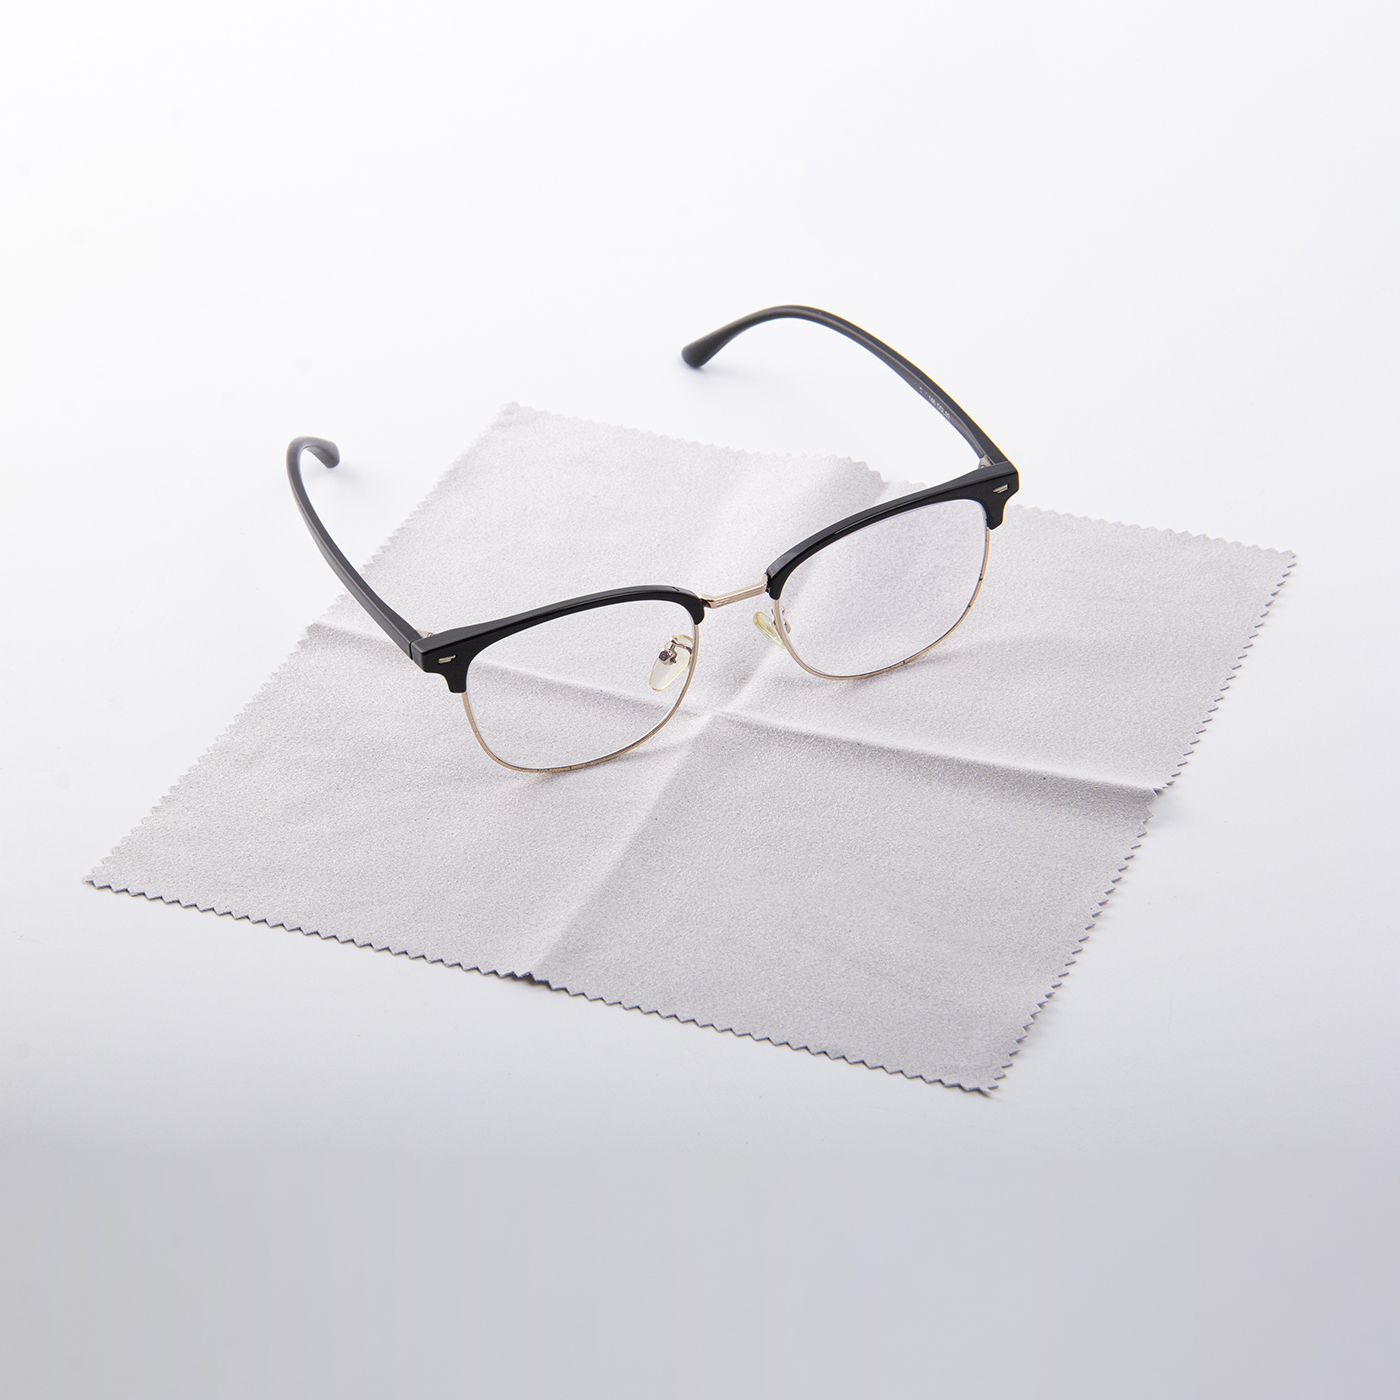 20 x 20 cm Microfiber Glasses Cleaning Cloth3